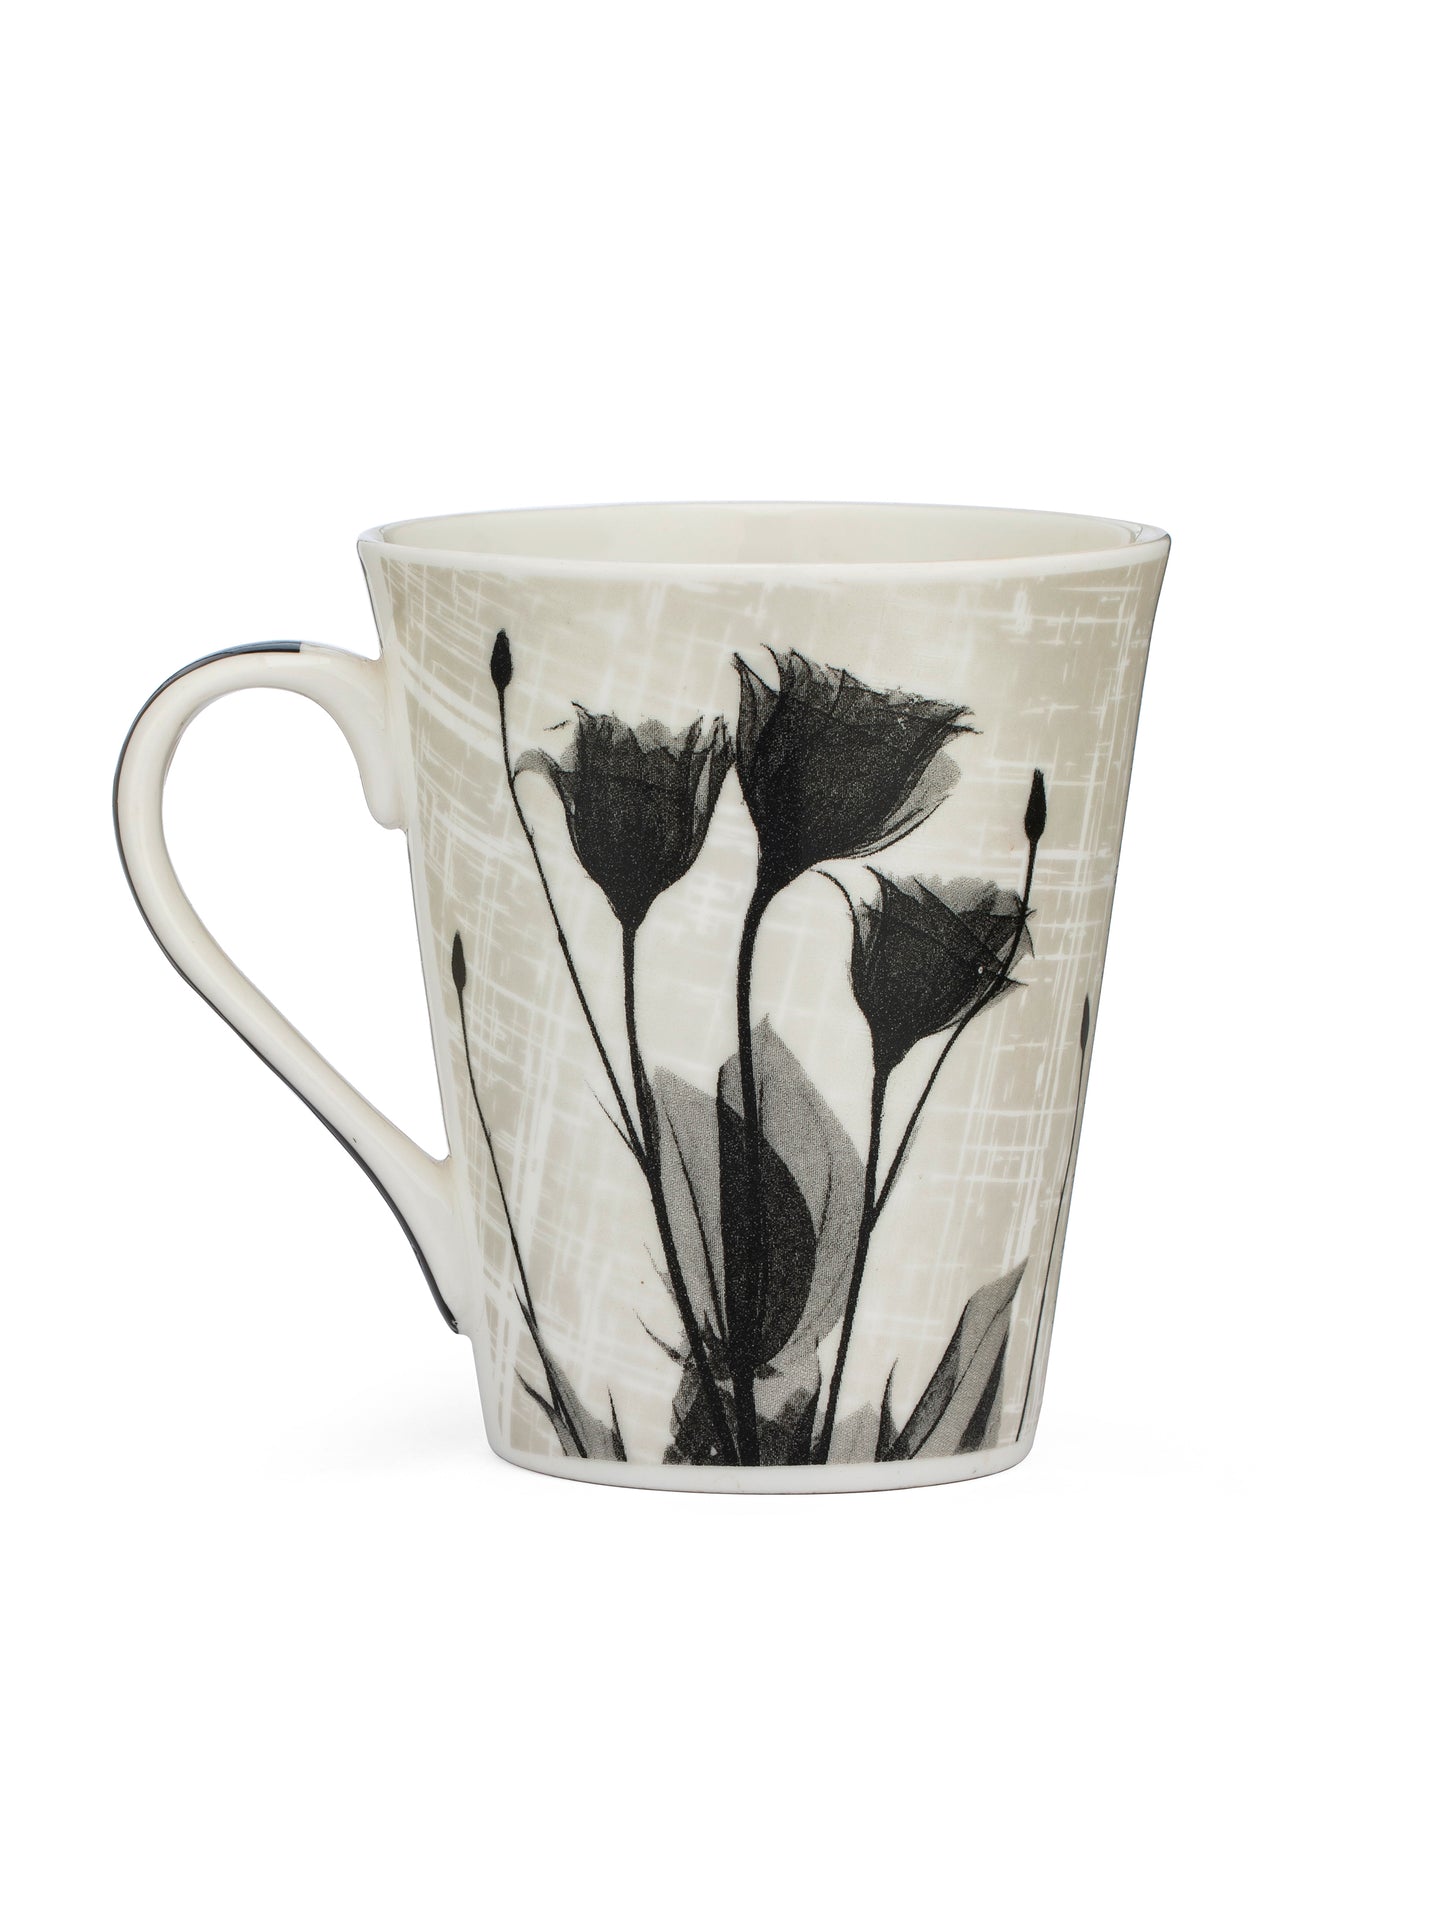 Ceramic Black & White Monochrome Mug and Bowl Snack Set (2 Mugs + 1 Bowl) (MC717)